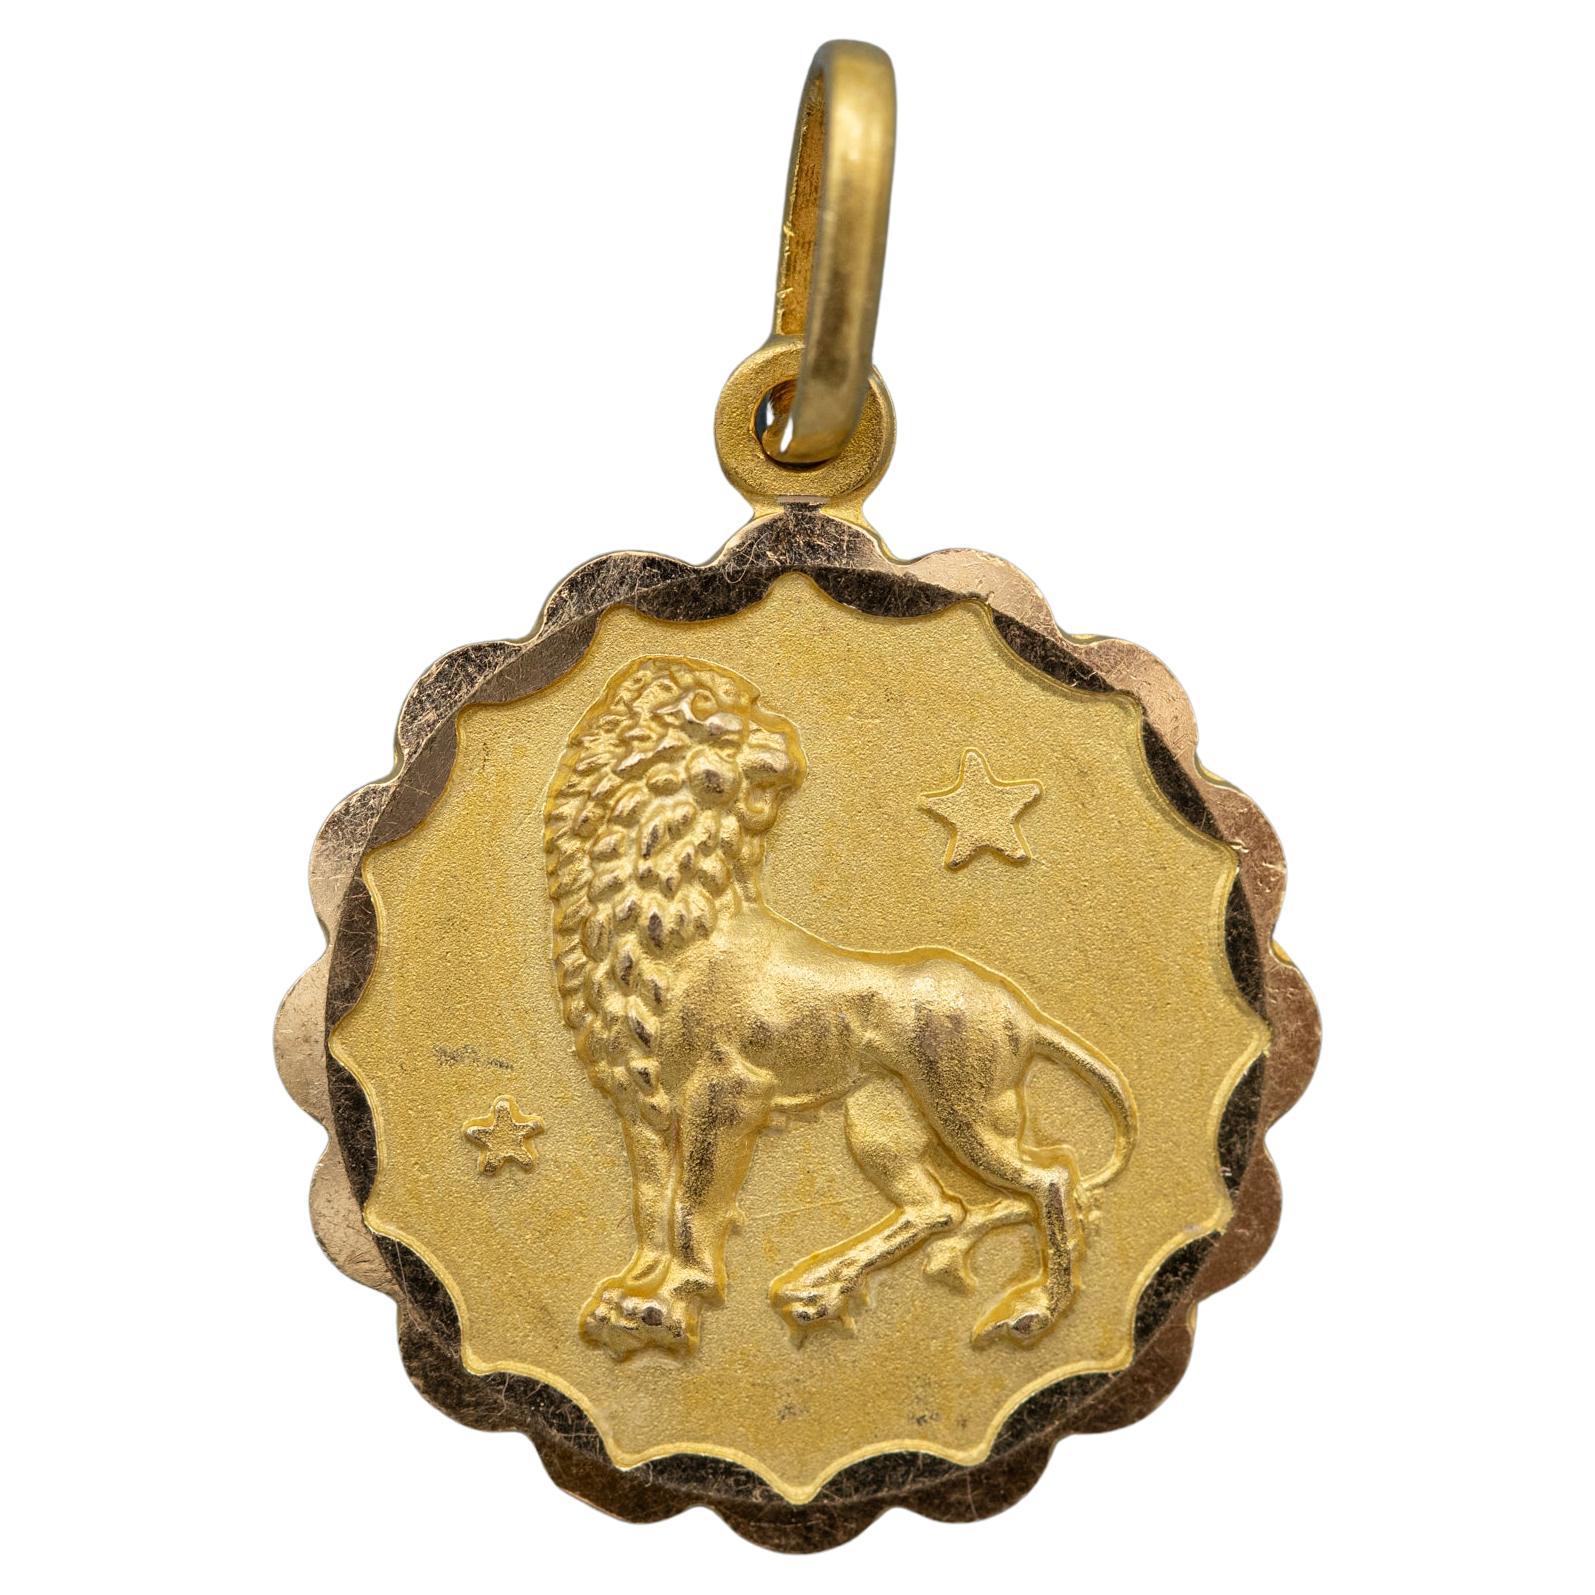 Vintage 18 k Italian zodiac pendant - Leo charm - solid yellow gold - Star sign